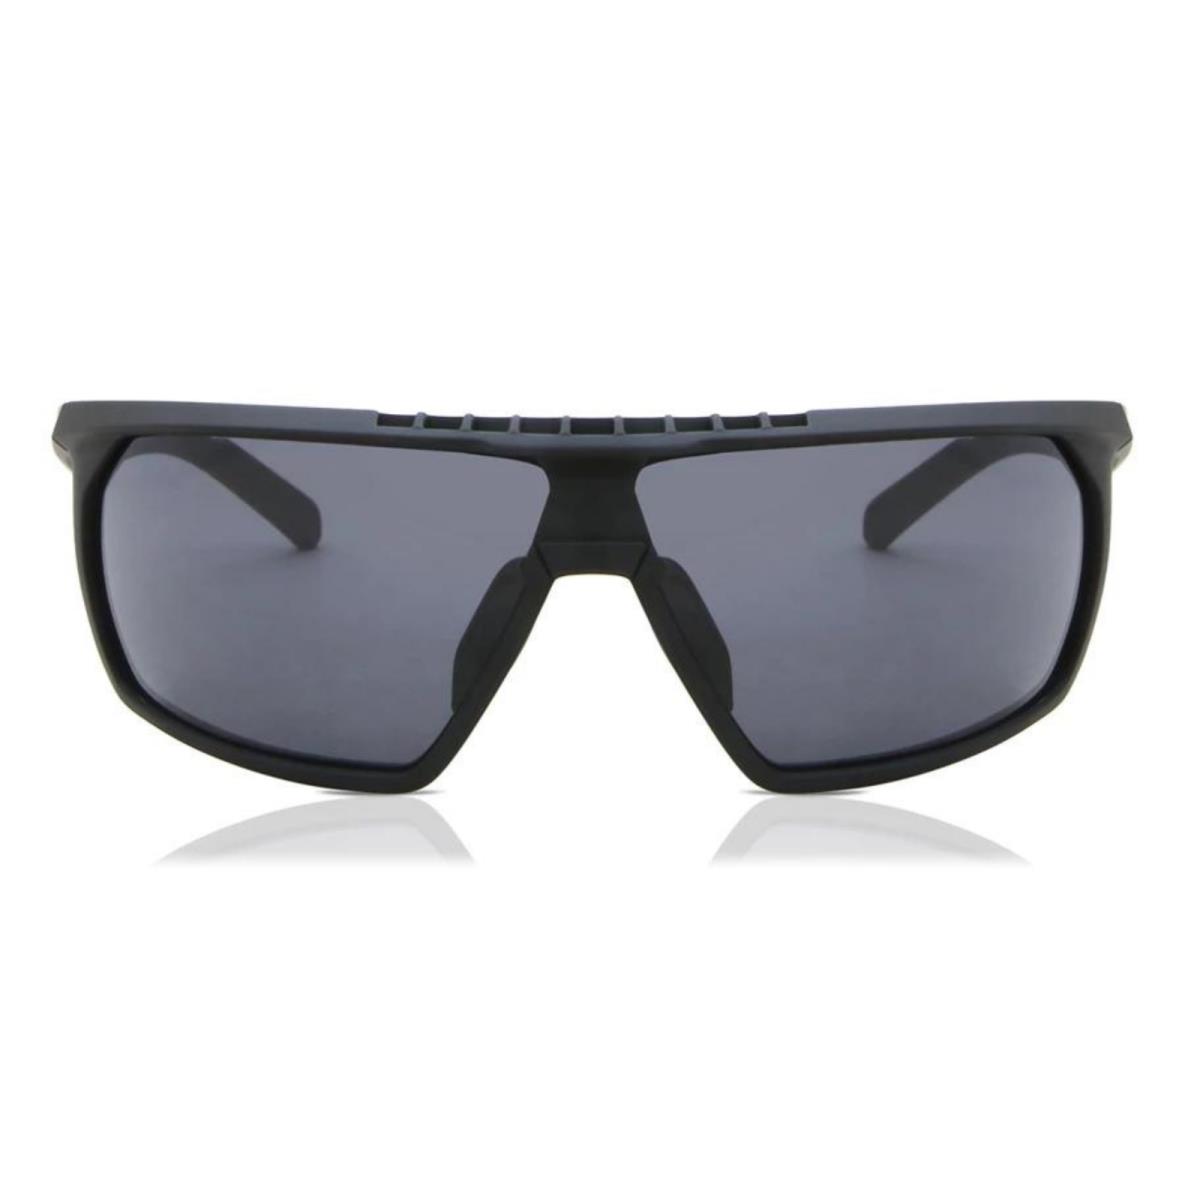 Adidas Sunglasses 0SP0030/S 02A 70 Full Rim Matte Black with Grey Lens For Men